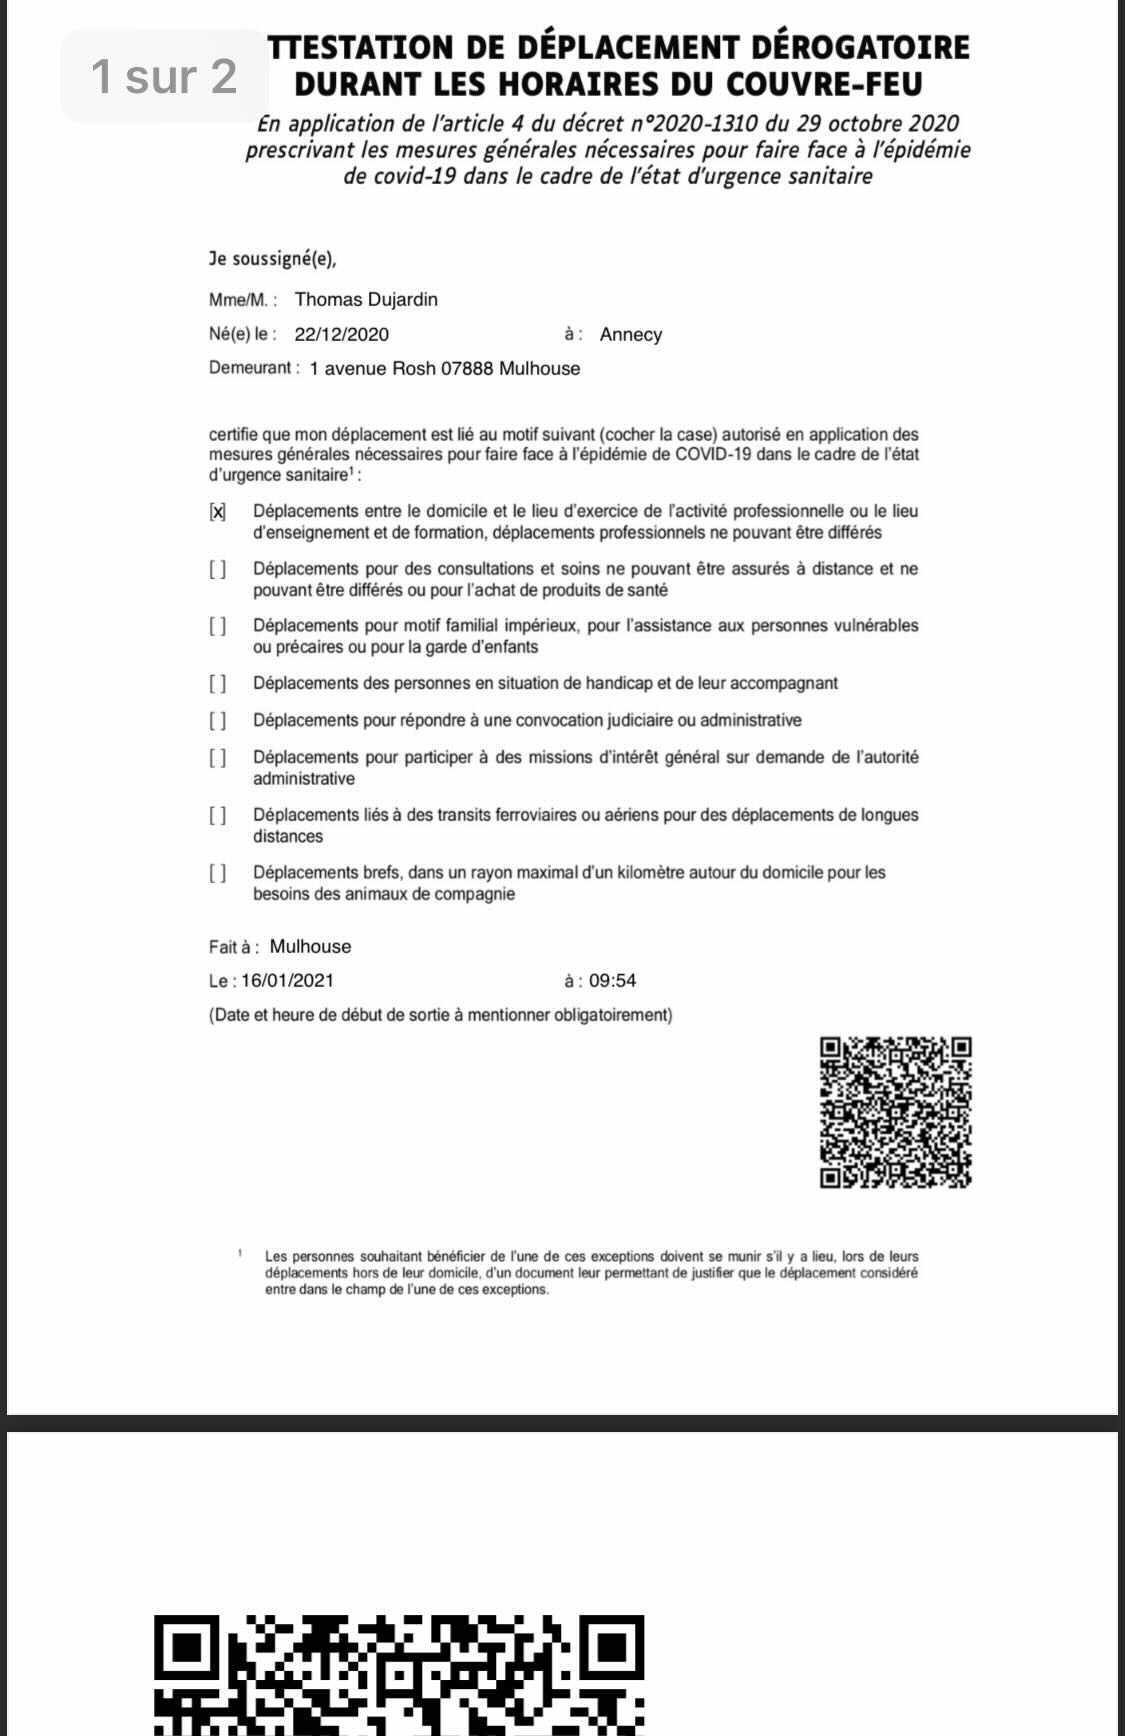 IPhon.fr v1.2 curfew certificate